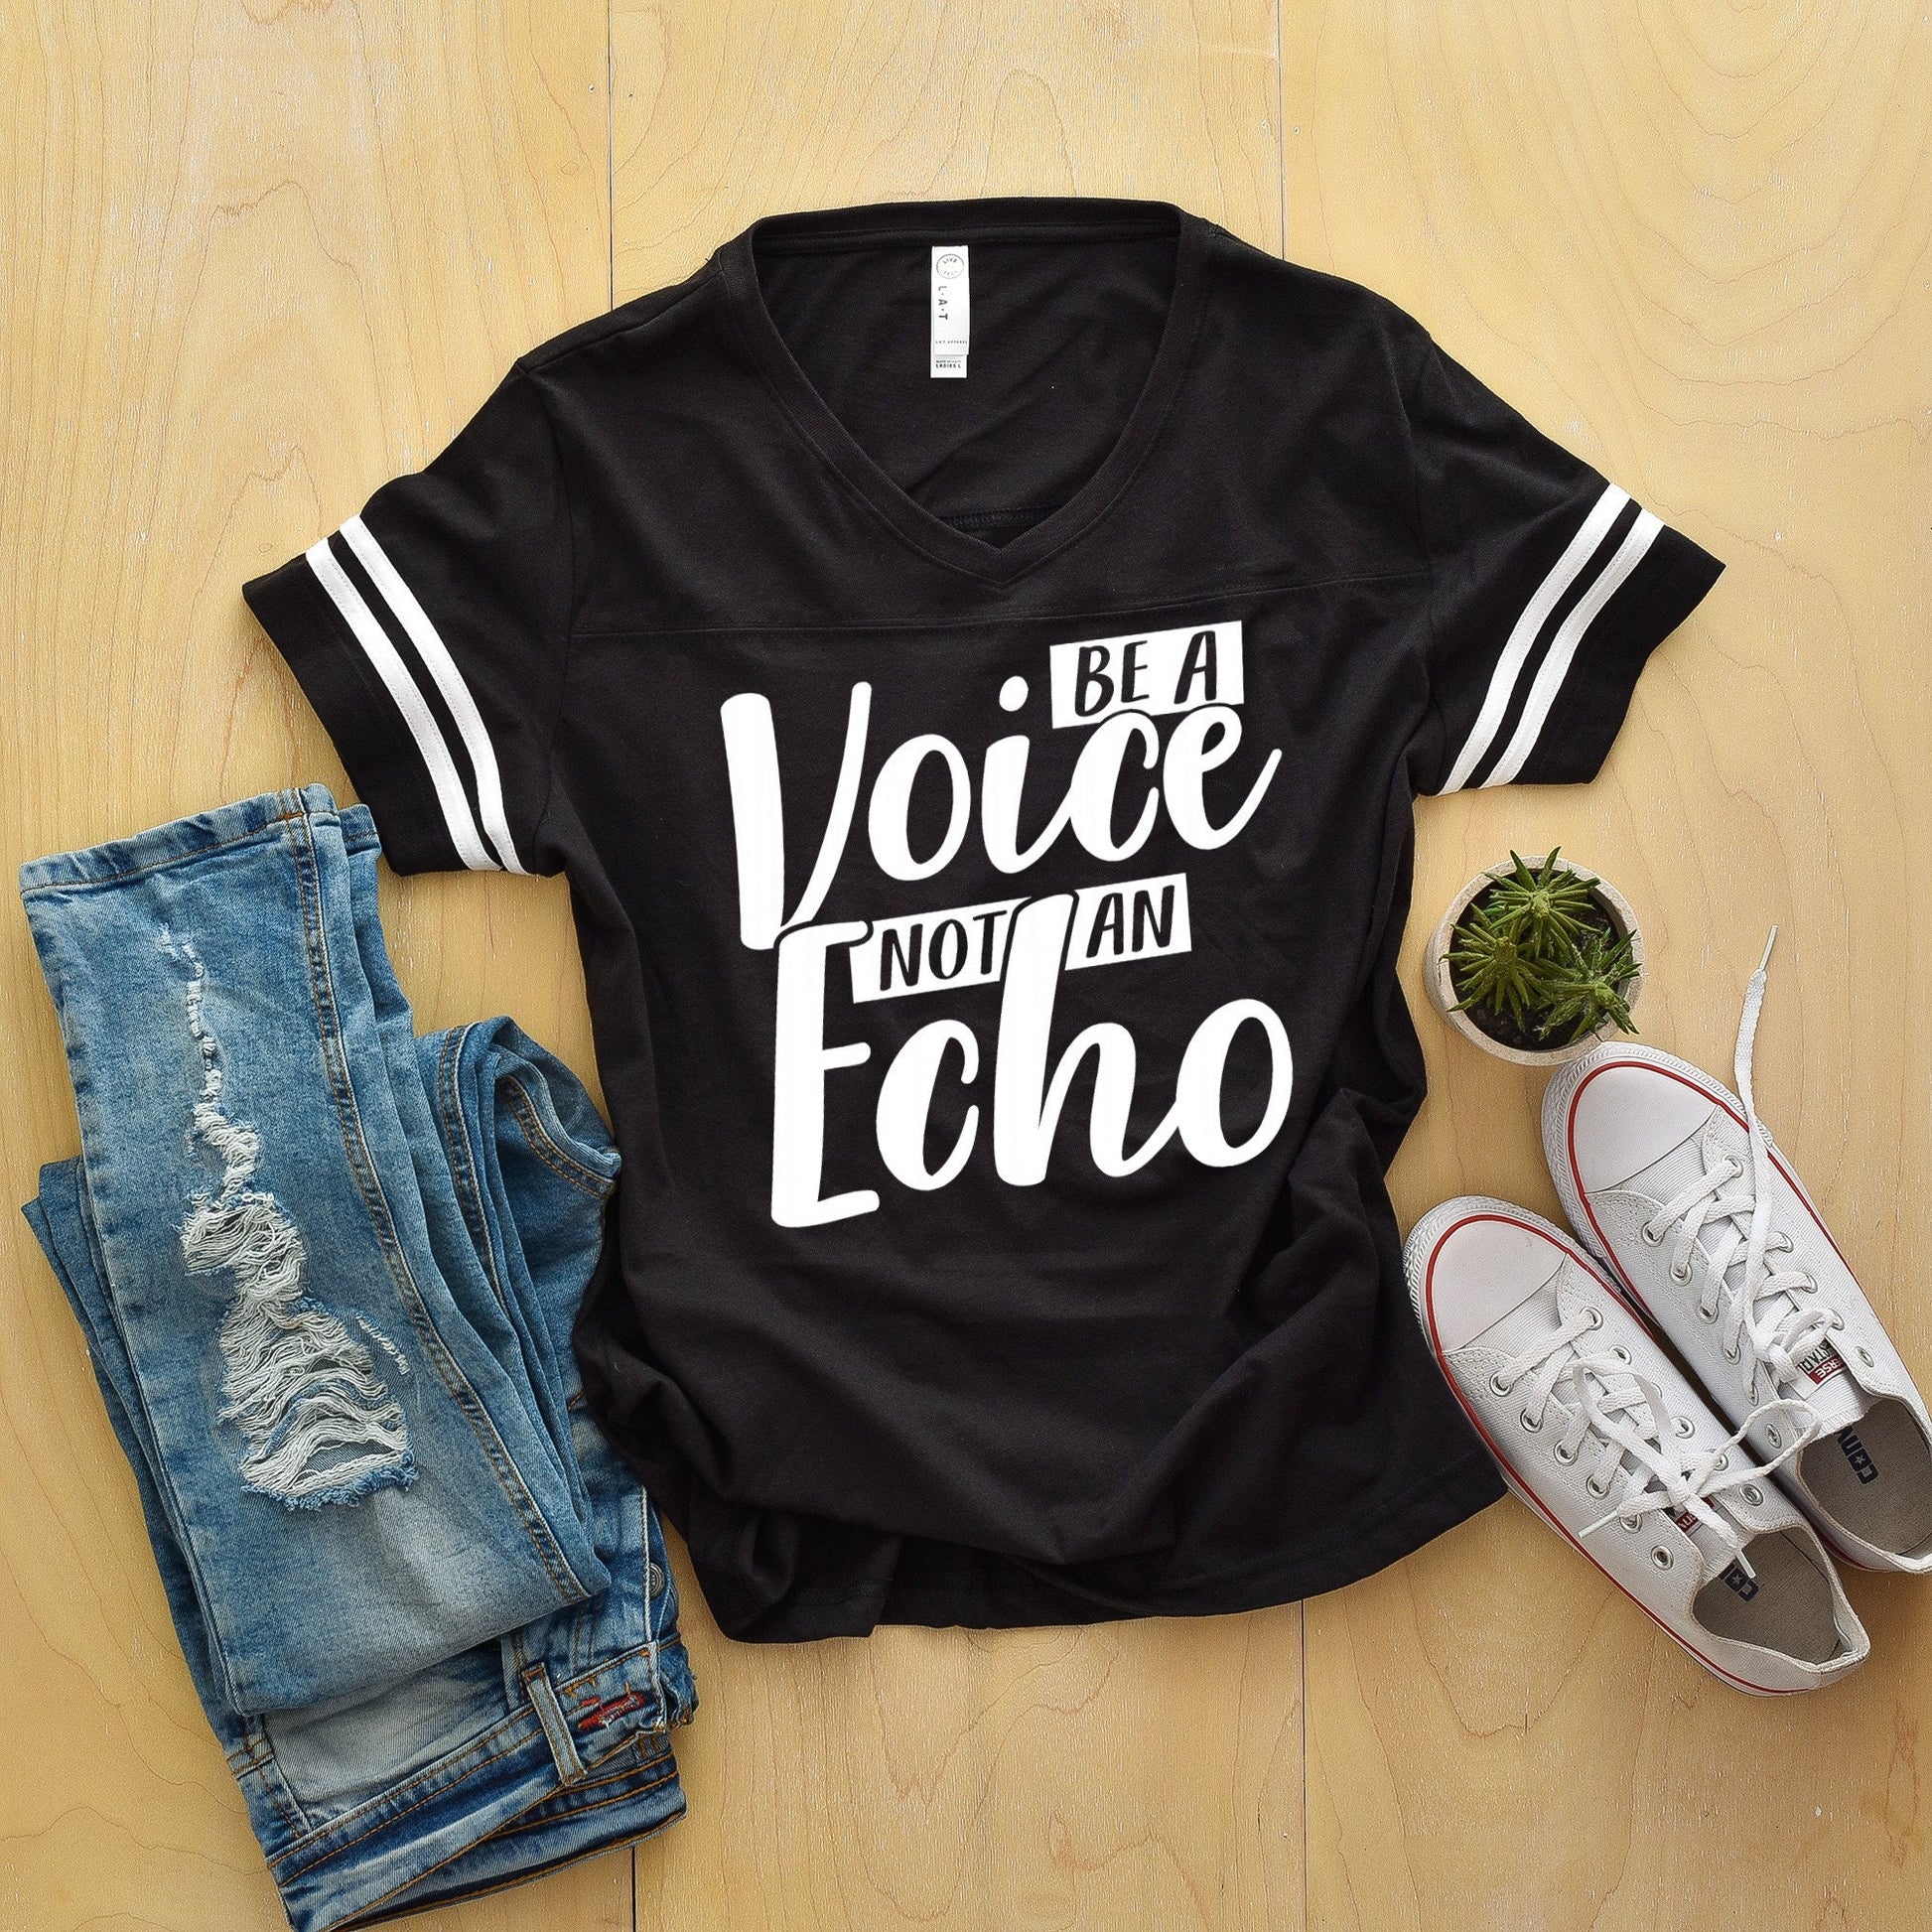 Be a Voice Not an Echo Football Style Women's t-shirt - Protest shirt - Activist shirt - Equality shirt - Women's Rights Shirt